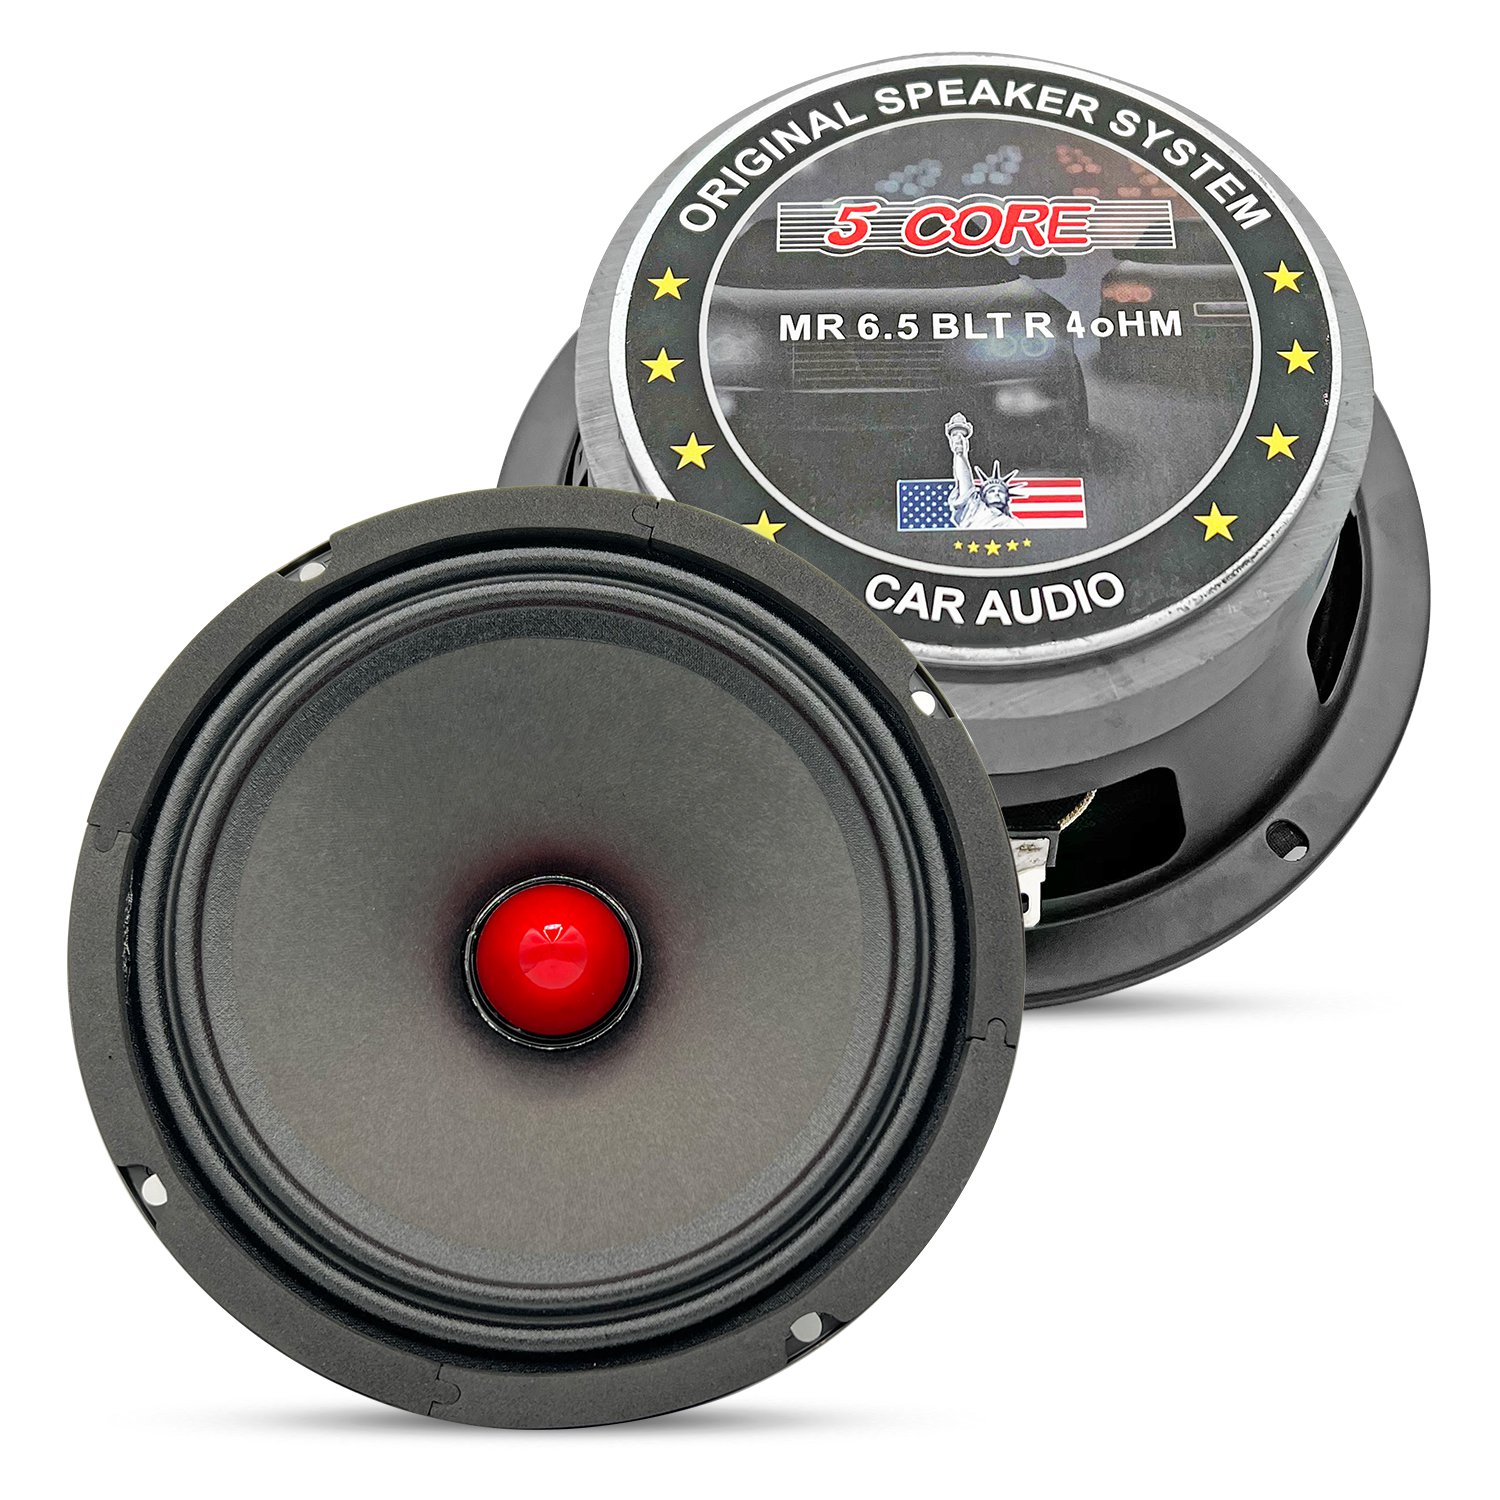 5 Core 6.5 Car Audio Speakers with Bullet 1000 W , 4 Ohm Mid-Range Loudspeaker MR 6.5 BLT R 4oHM